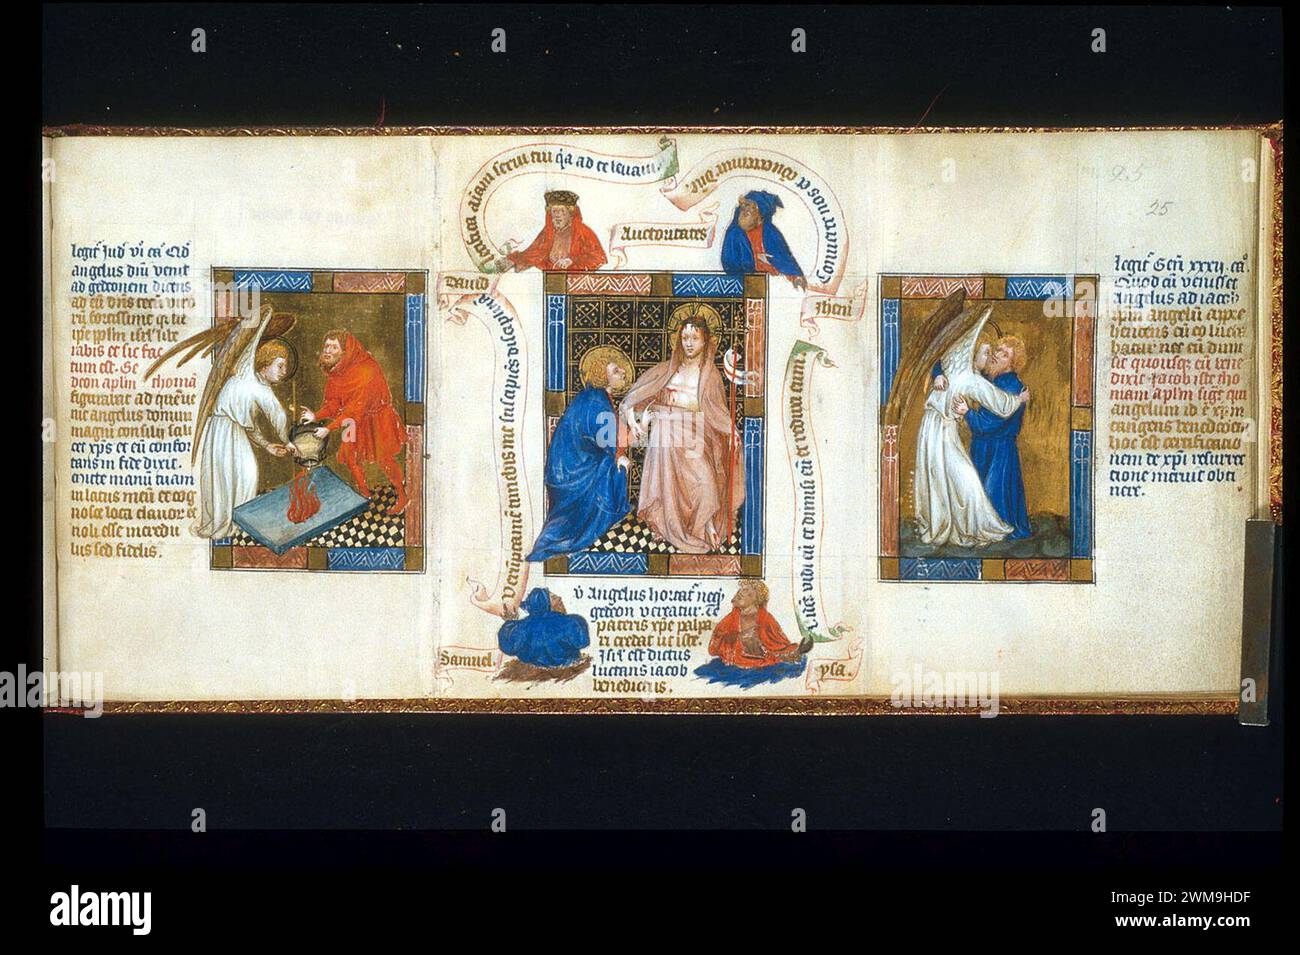 Biblia Pauperum - King's 5 - Folio 25 - Incredulity of Thomas. Stock Photo